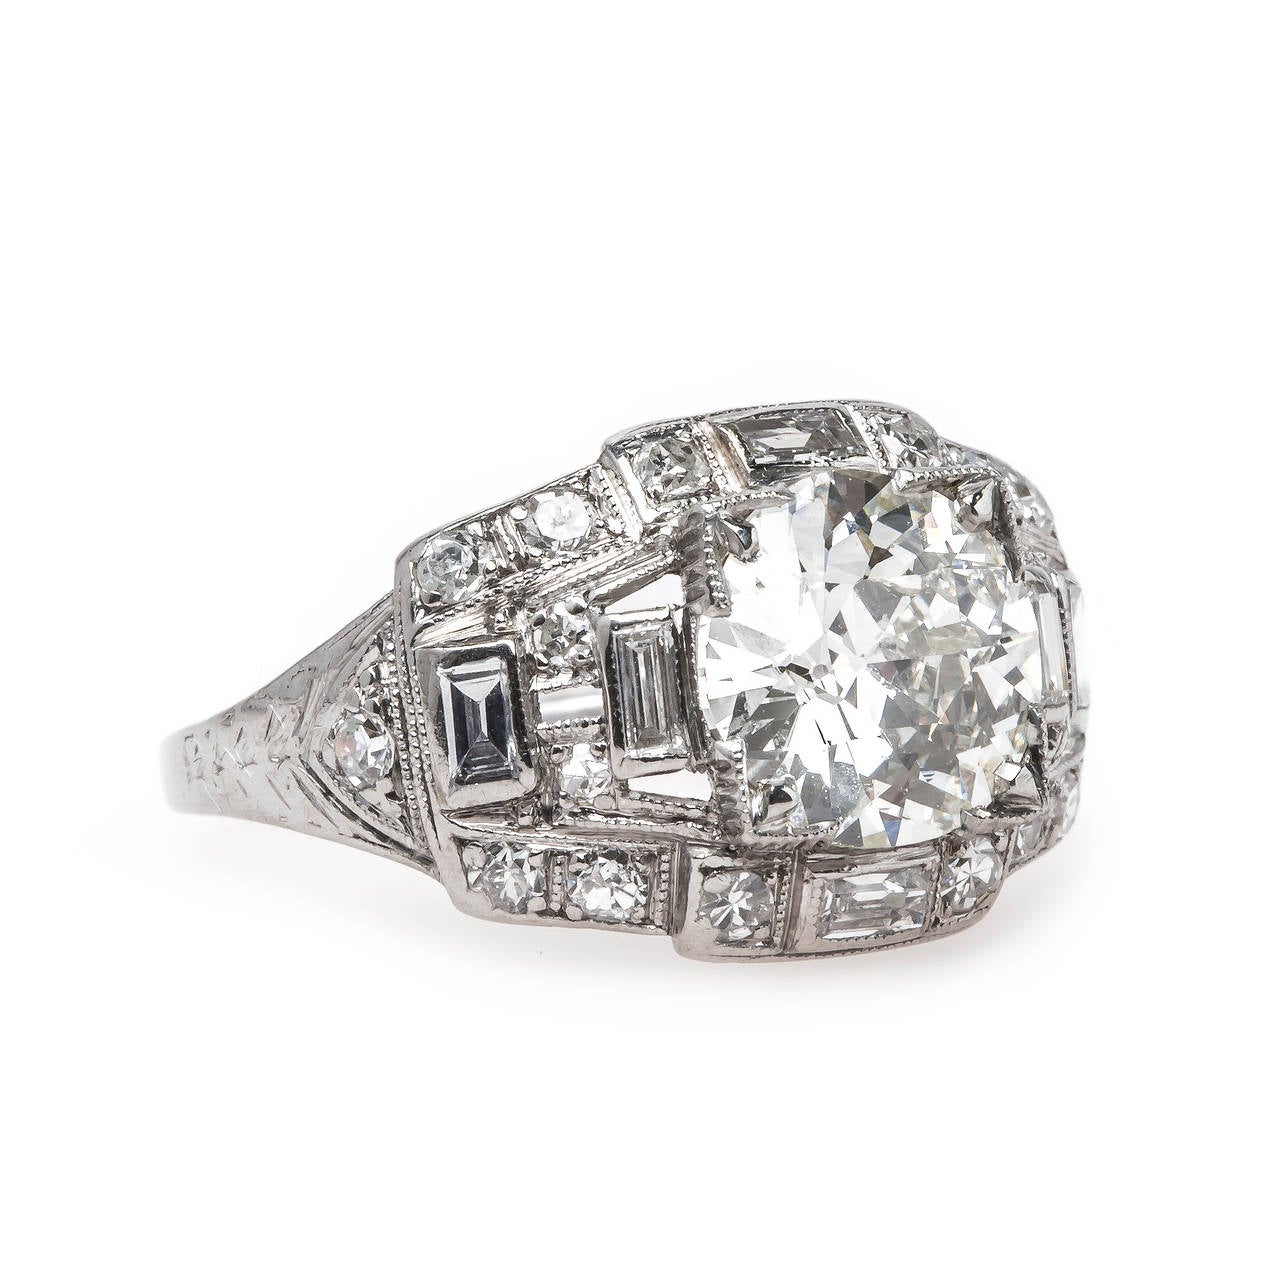 Exemplary Art Deco Diamond Platinum Engagement Ring 1